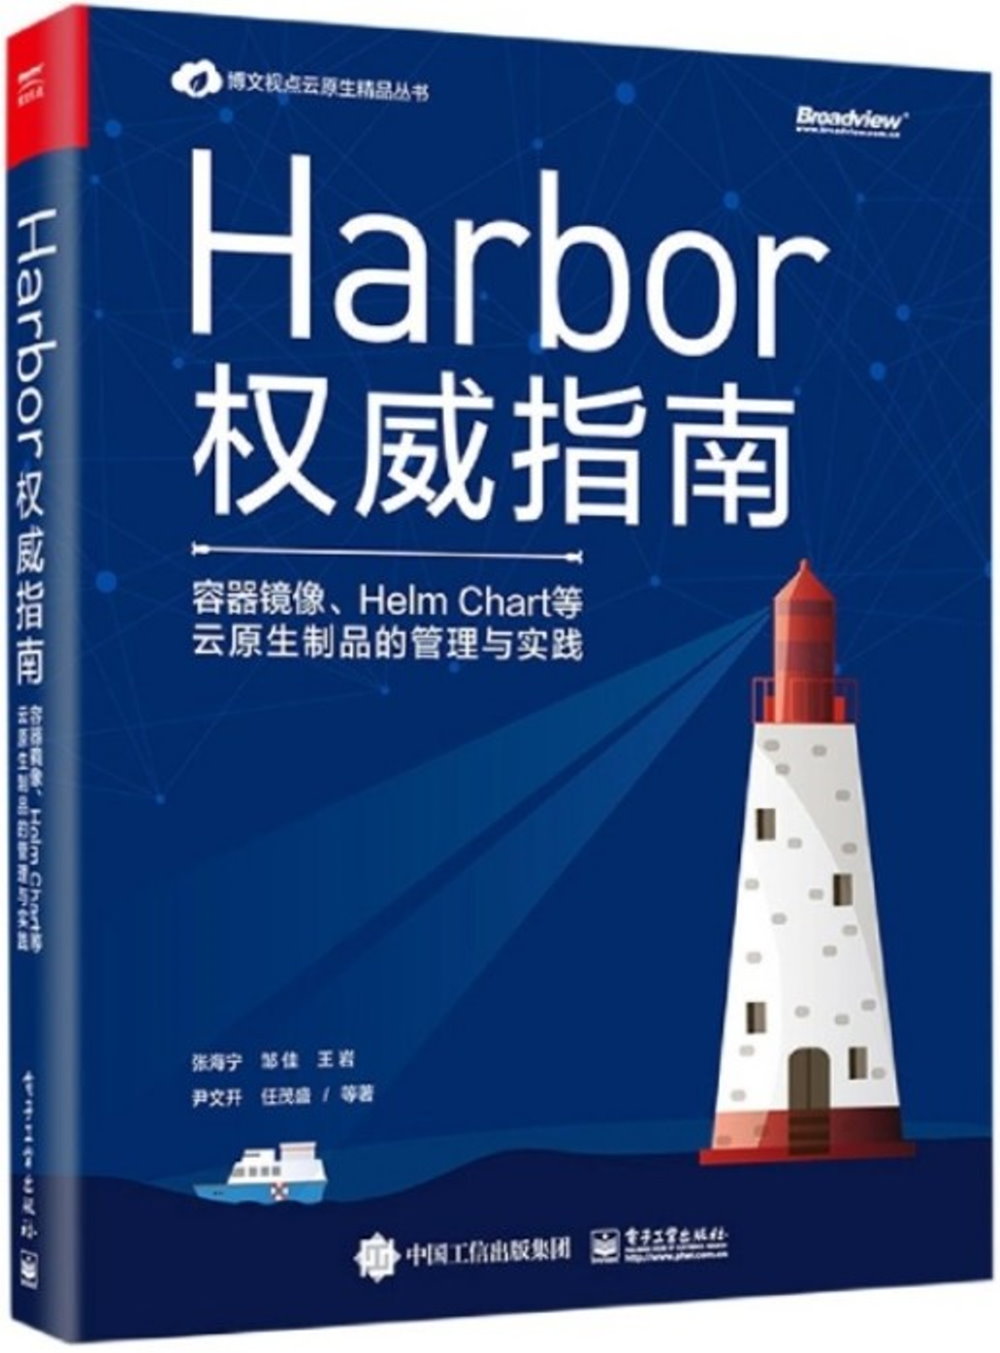 Harbor權威指南：容器鏡像、Helm Chart等雲原生製品的管理與實踐